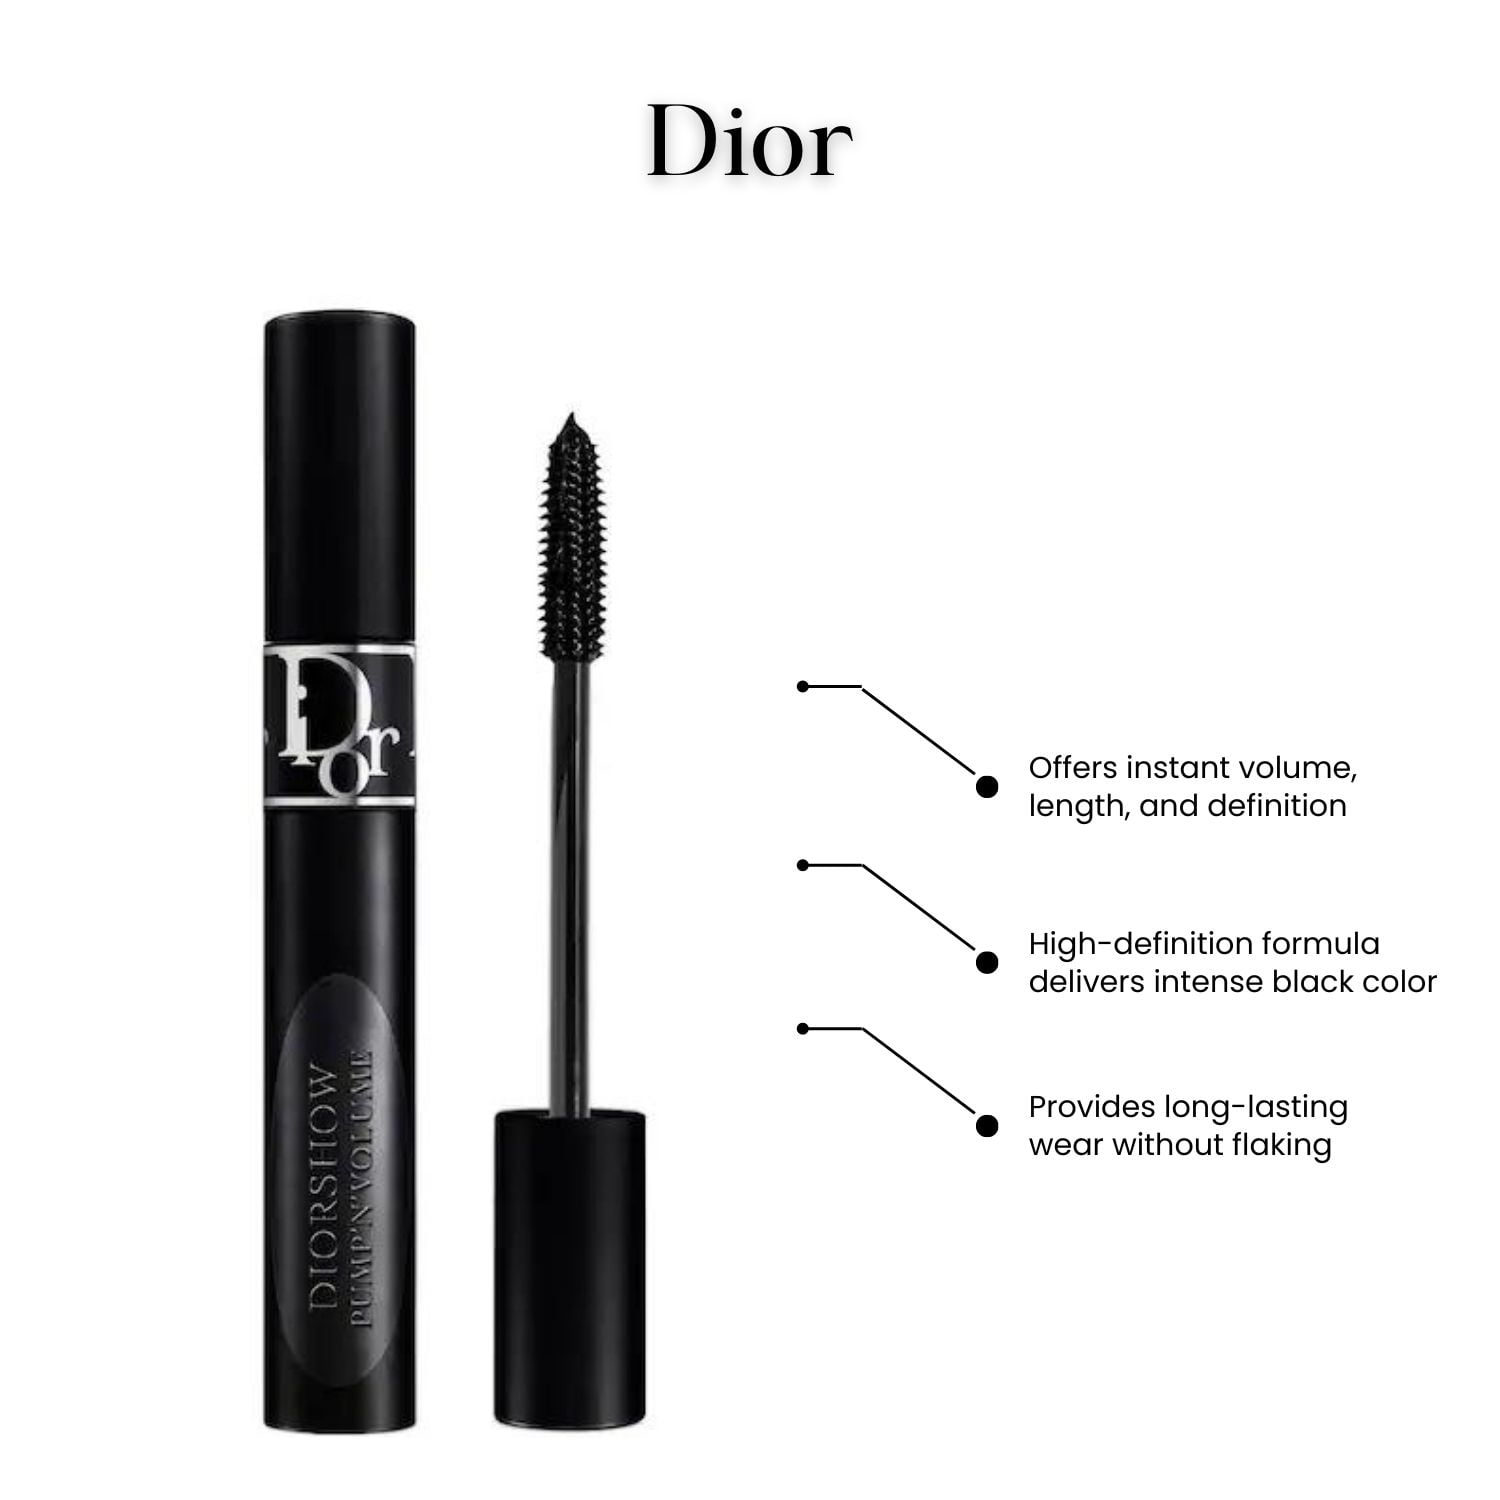 Amazoncom  Christian Dior Diorshow Pump N Volume Mascara Black Pump  021 Fl Oz  Beauty  Personal Care